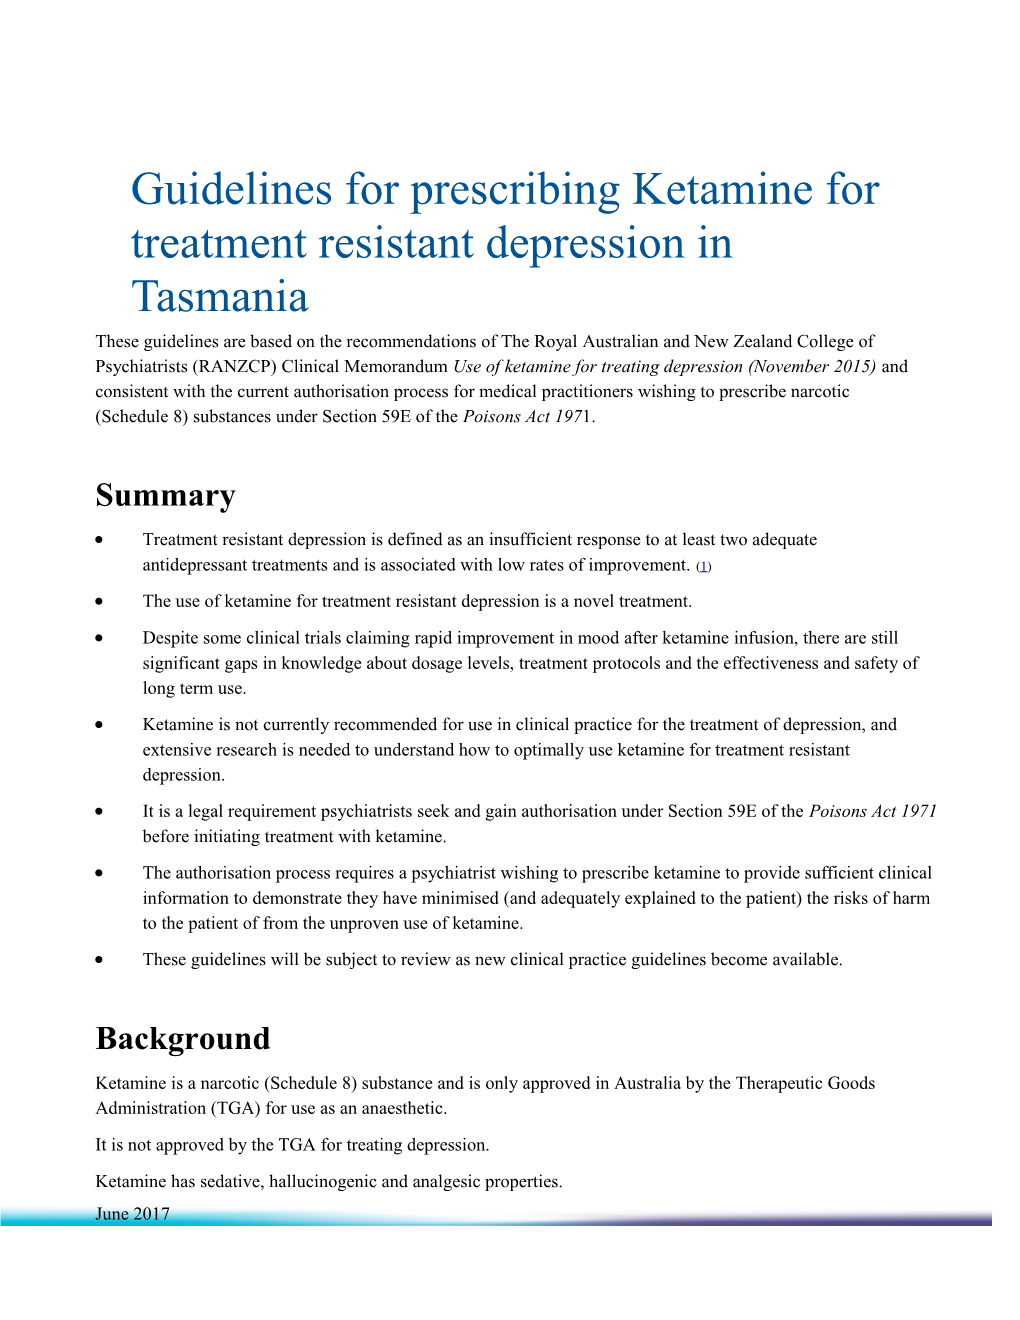 PSB Guidelines for Prescribing Ketamine for Treatment Resistant Depression in Tasmania 2017